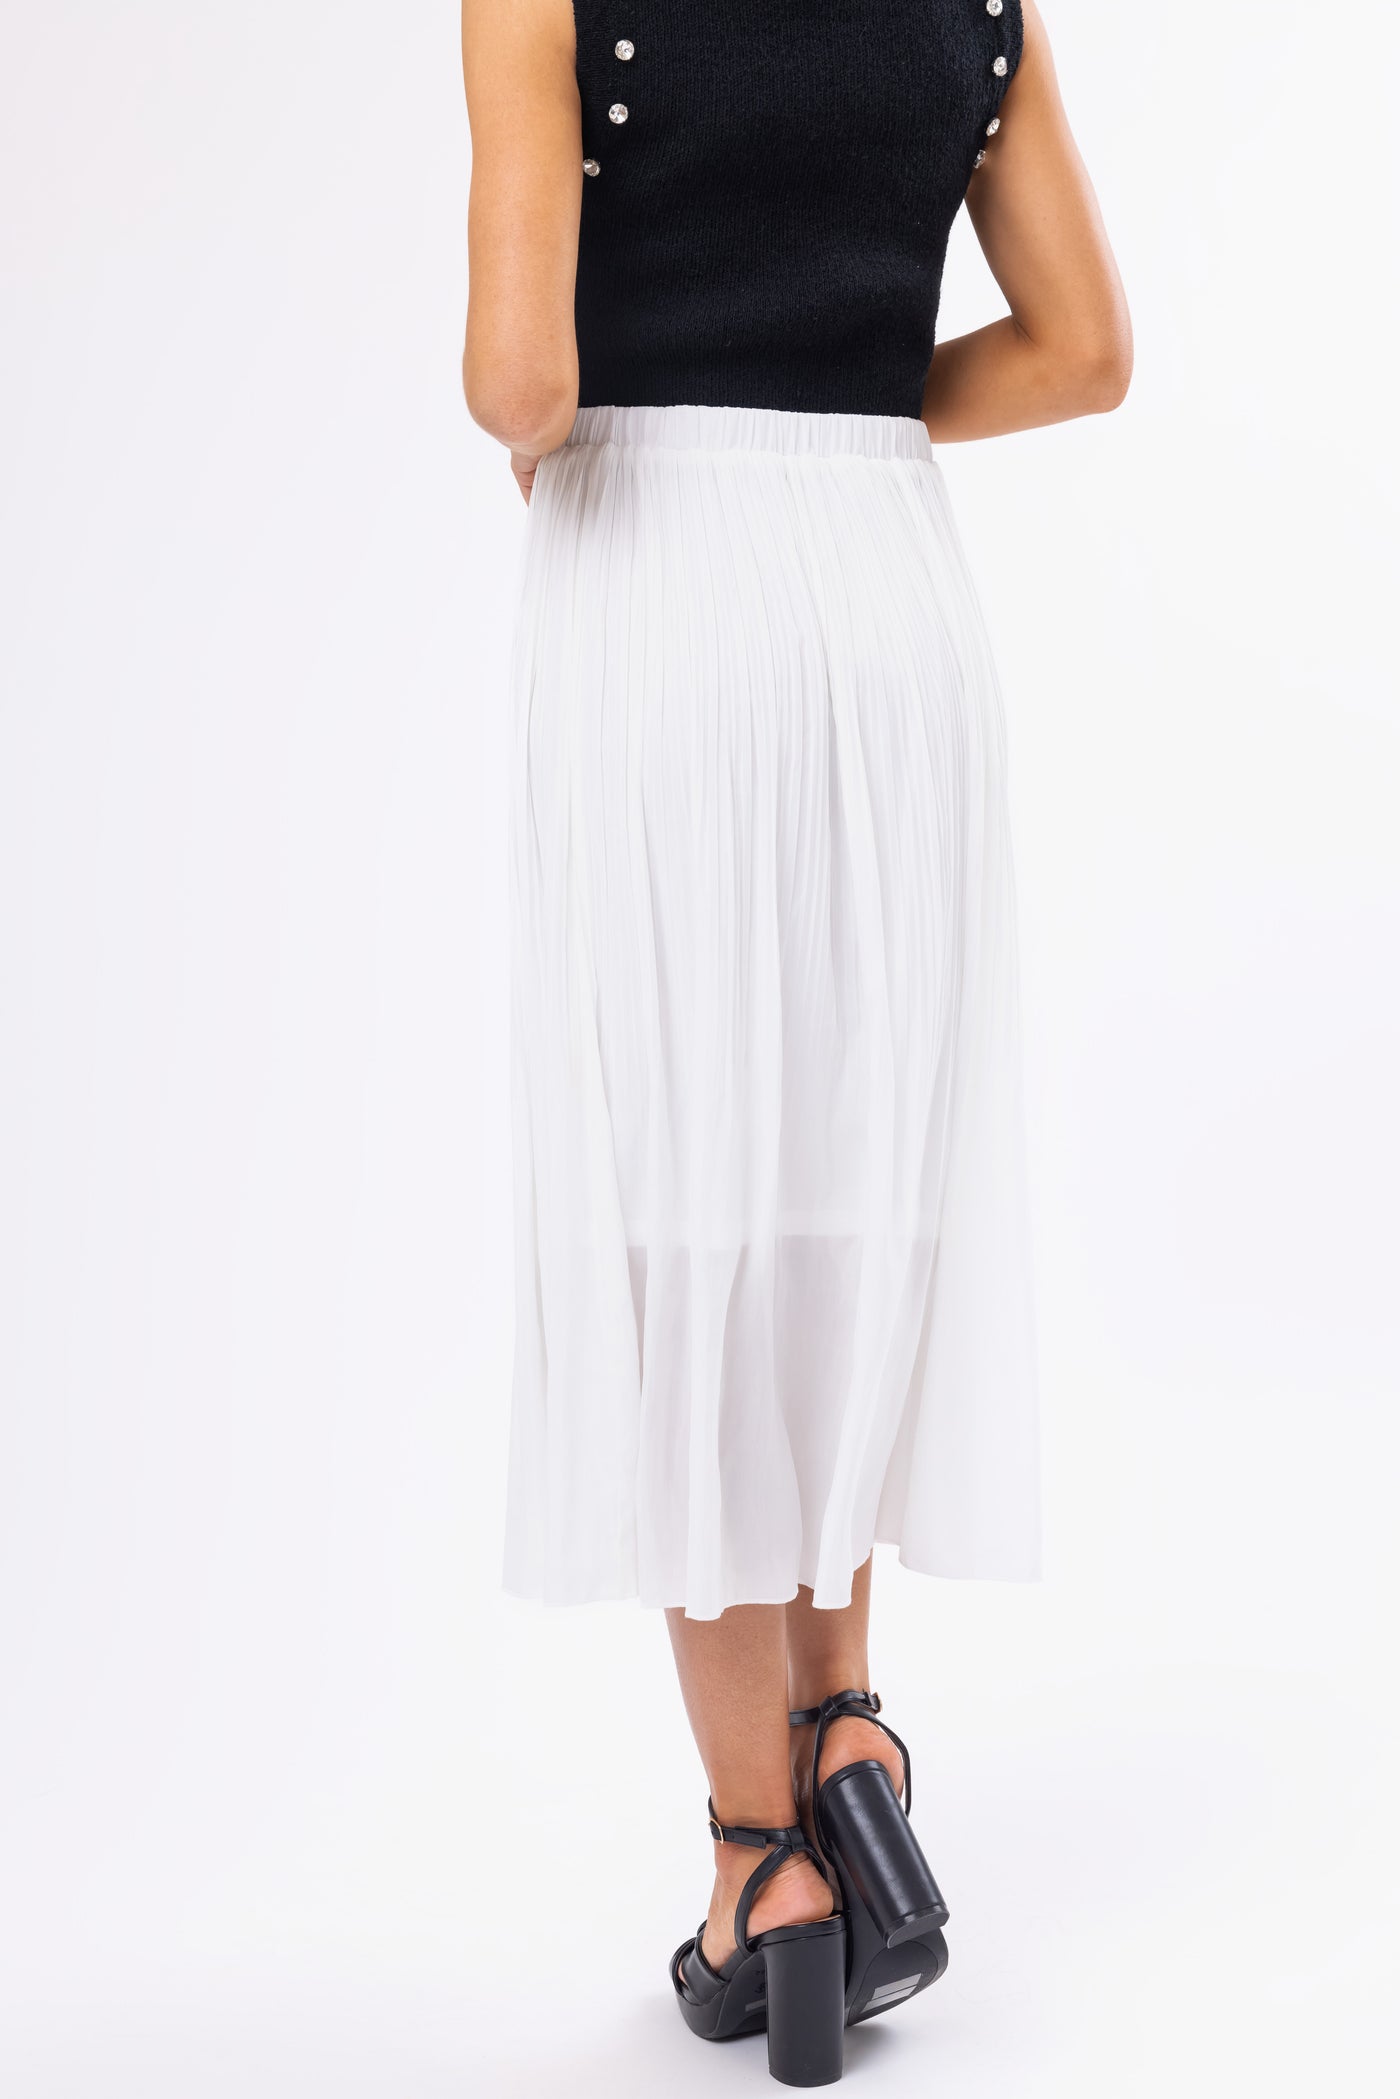 Off White Pleated Elastic Waistband Midi Skirt